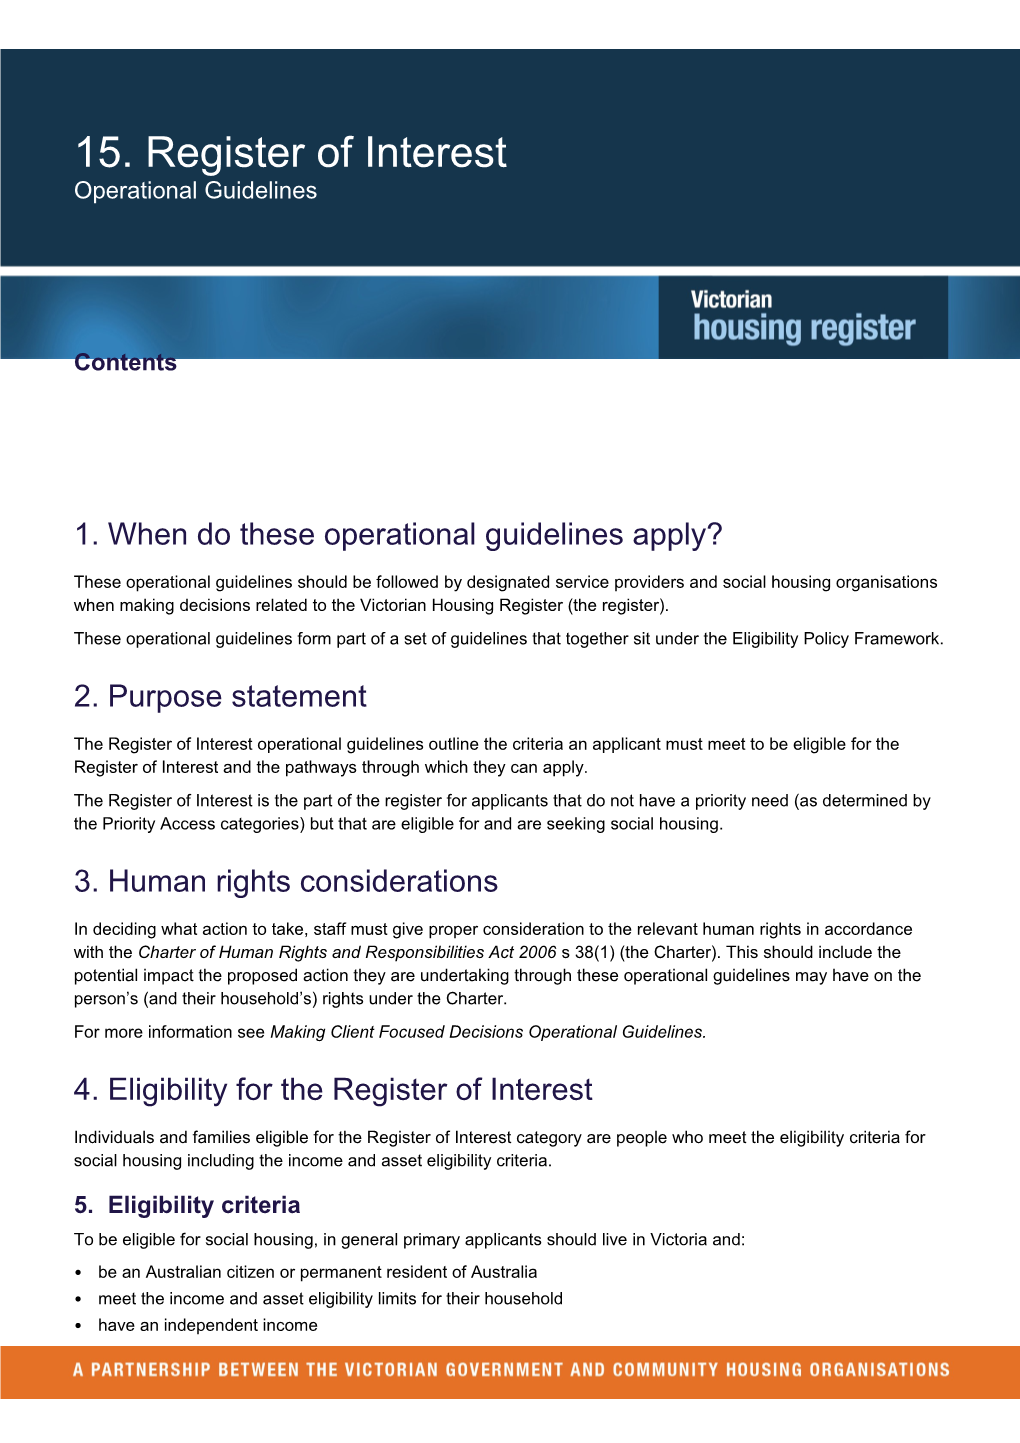 Victorian Housing Register: Register of Interest Operational Guidelines